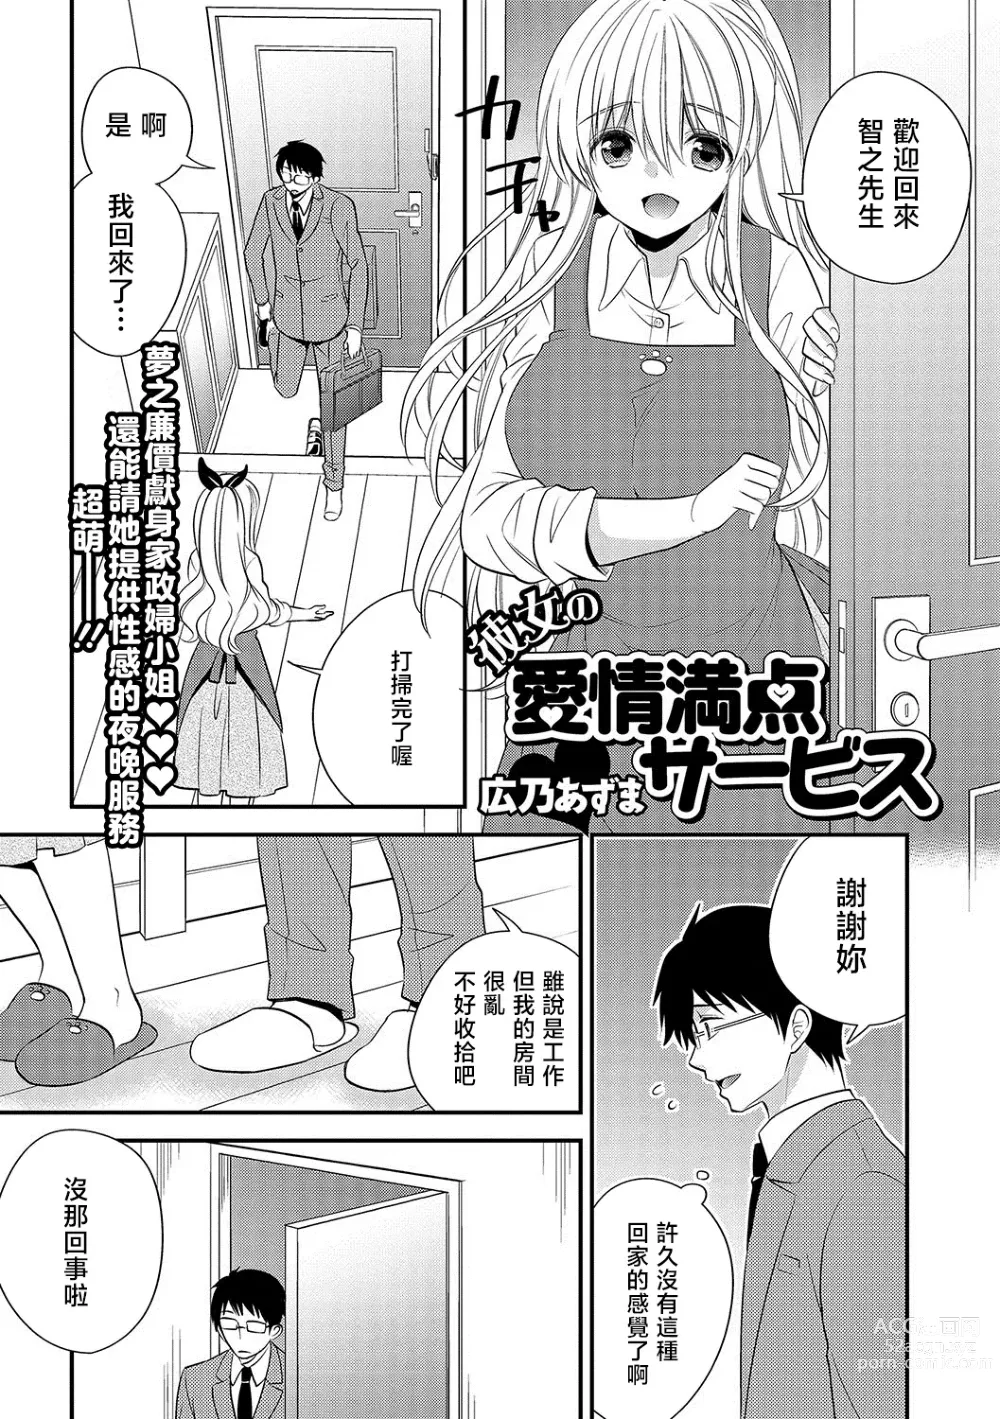 Page 1 of manga Kanojo no Aijou Manten Service